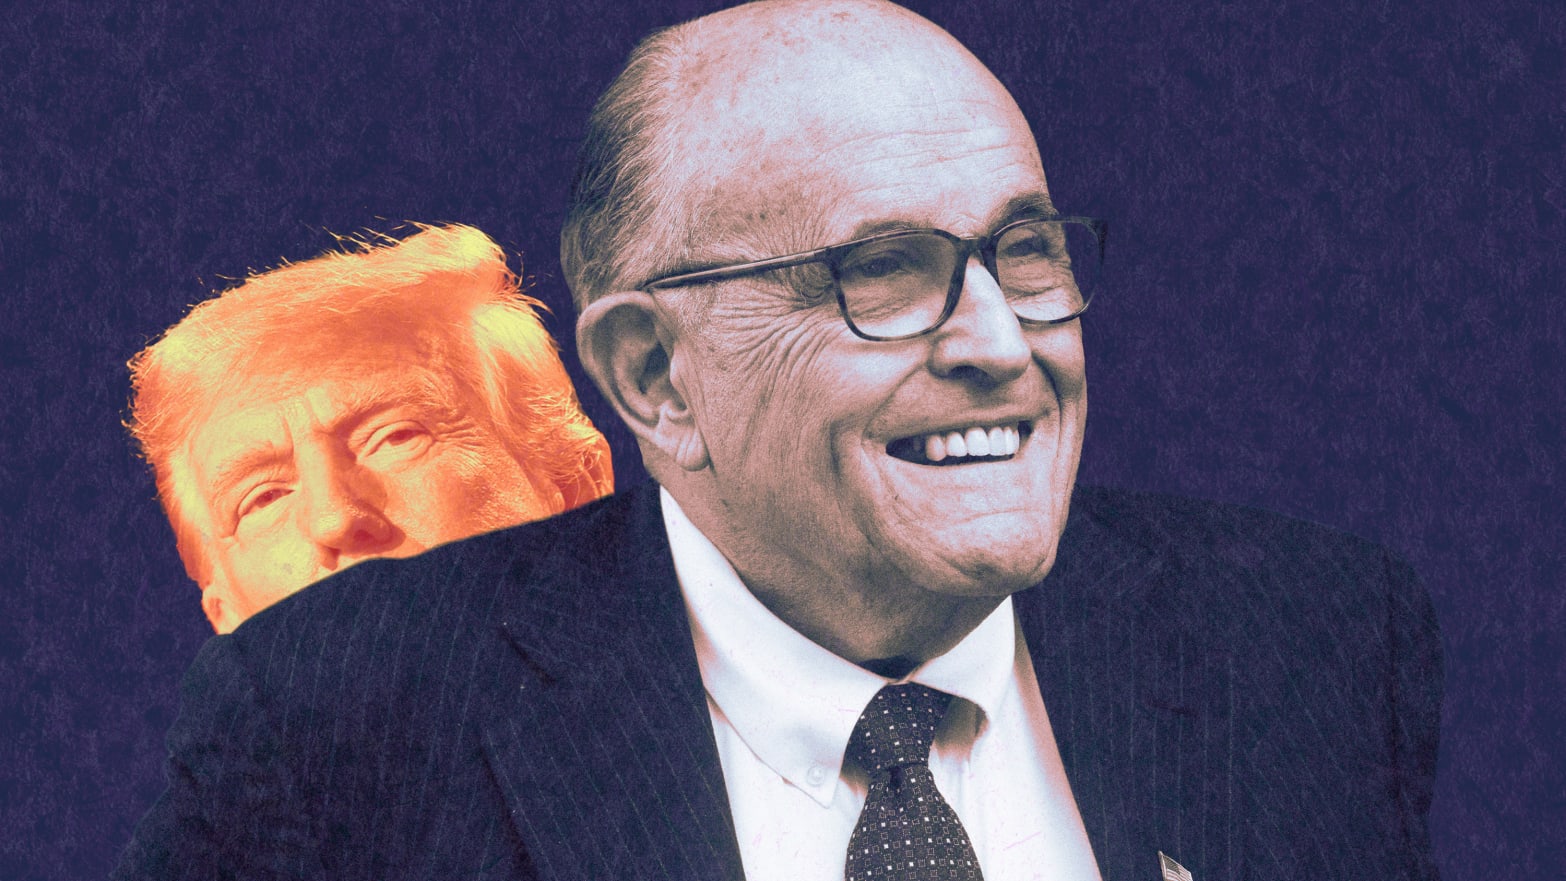 Rudy Giuliani reportedly met with prosecutors investigating Trump